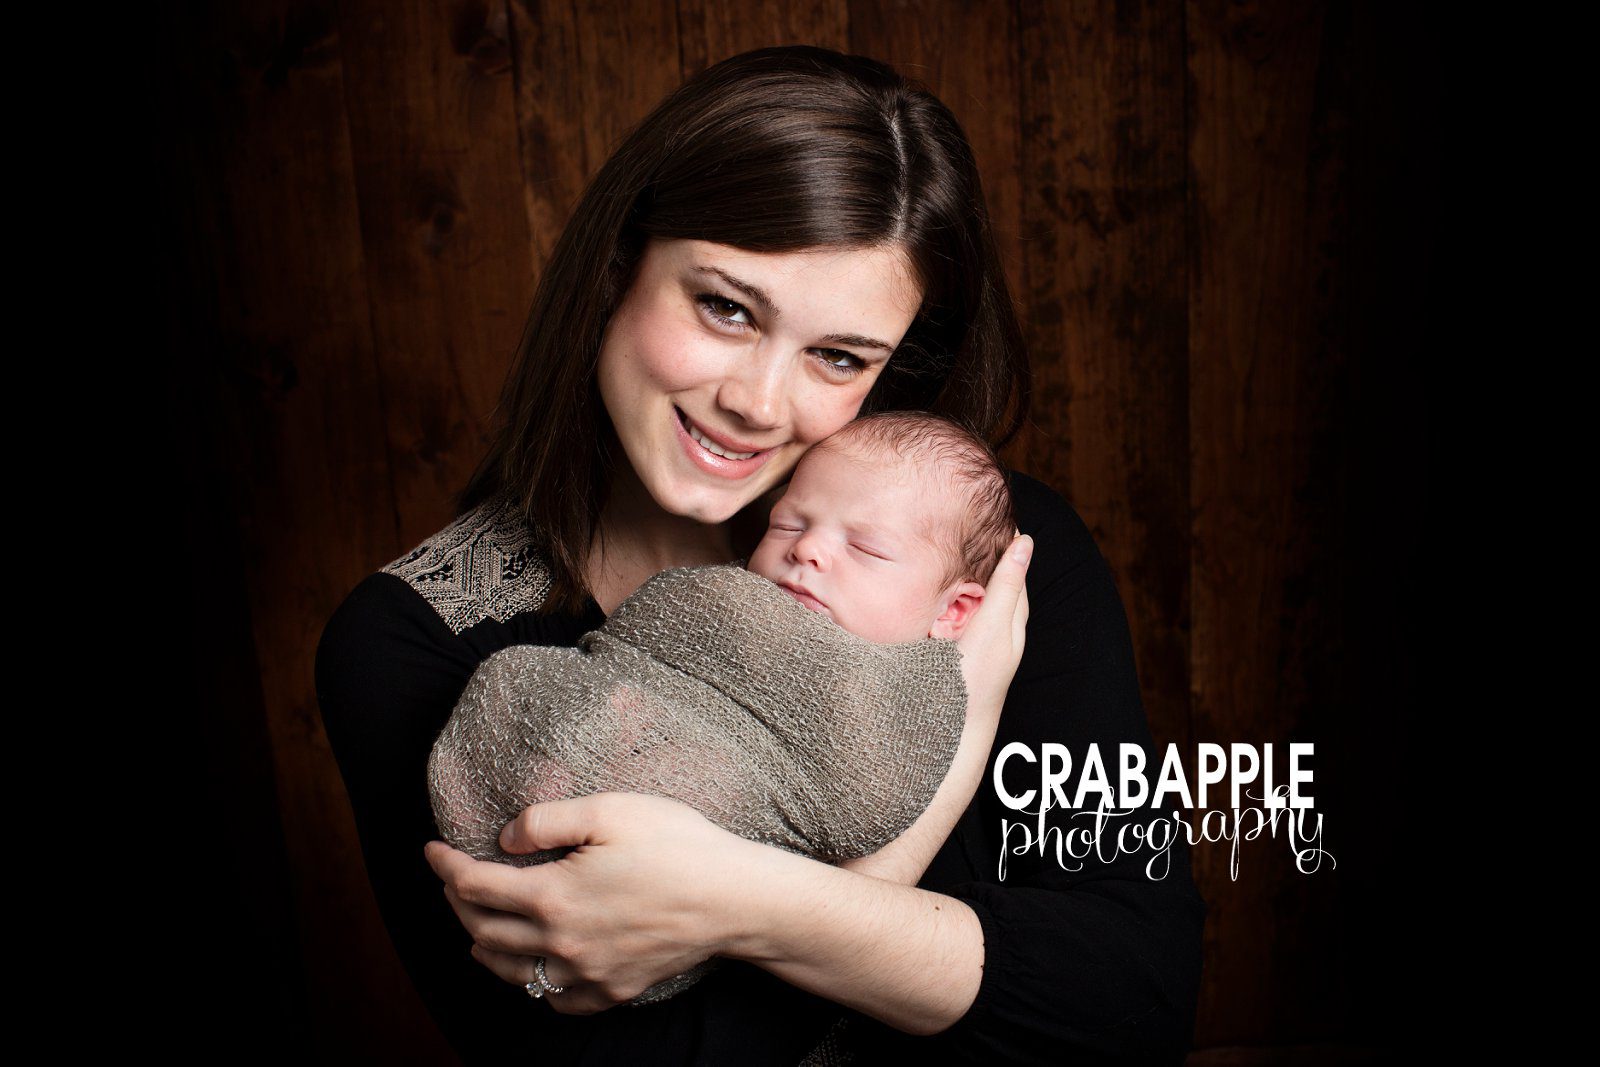 Cambridge Newborn Photography